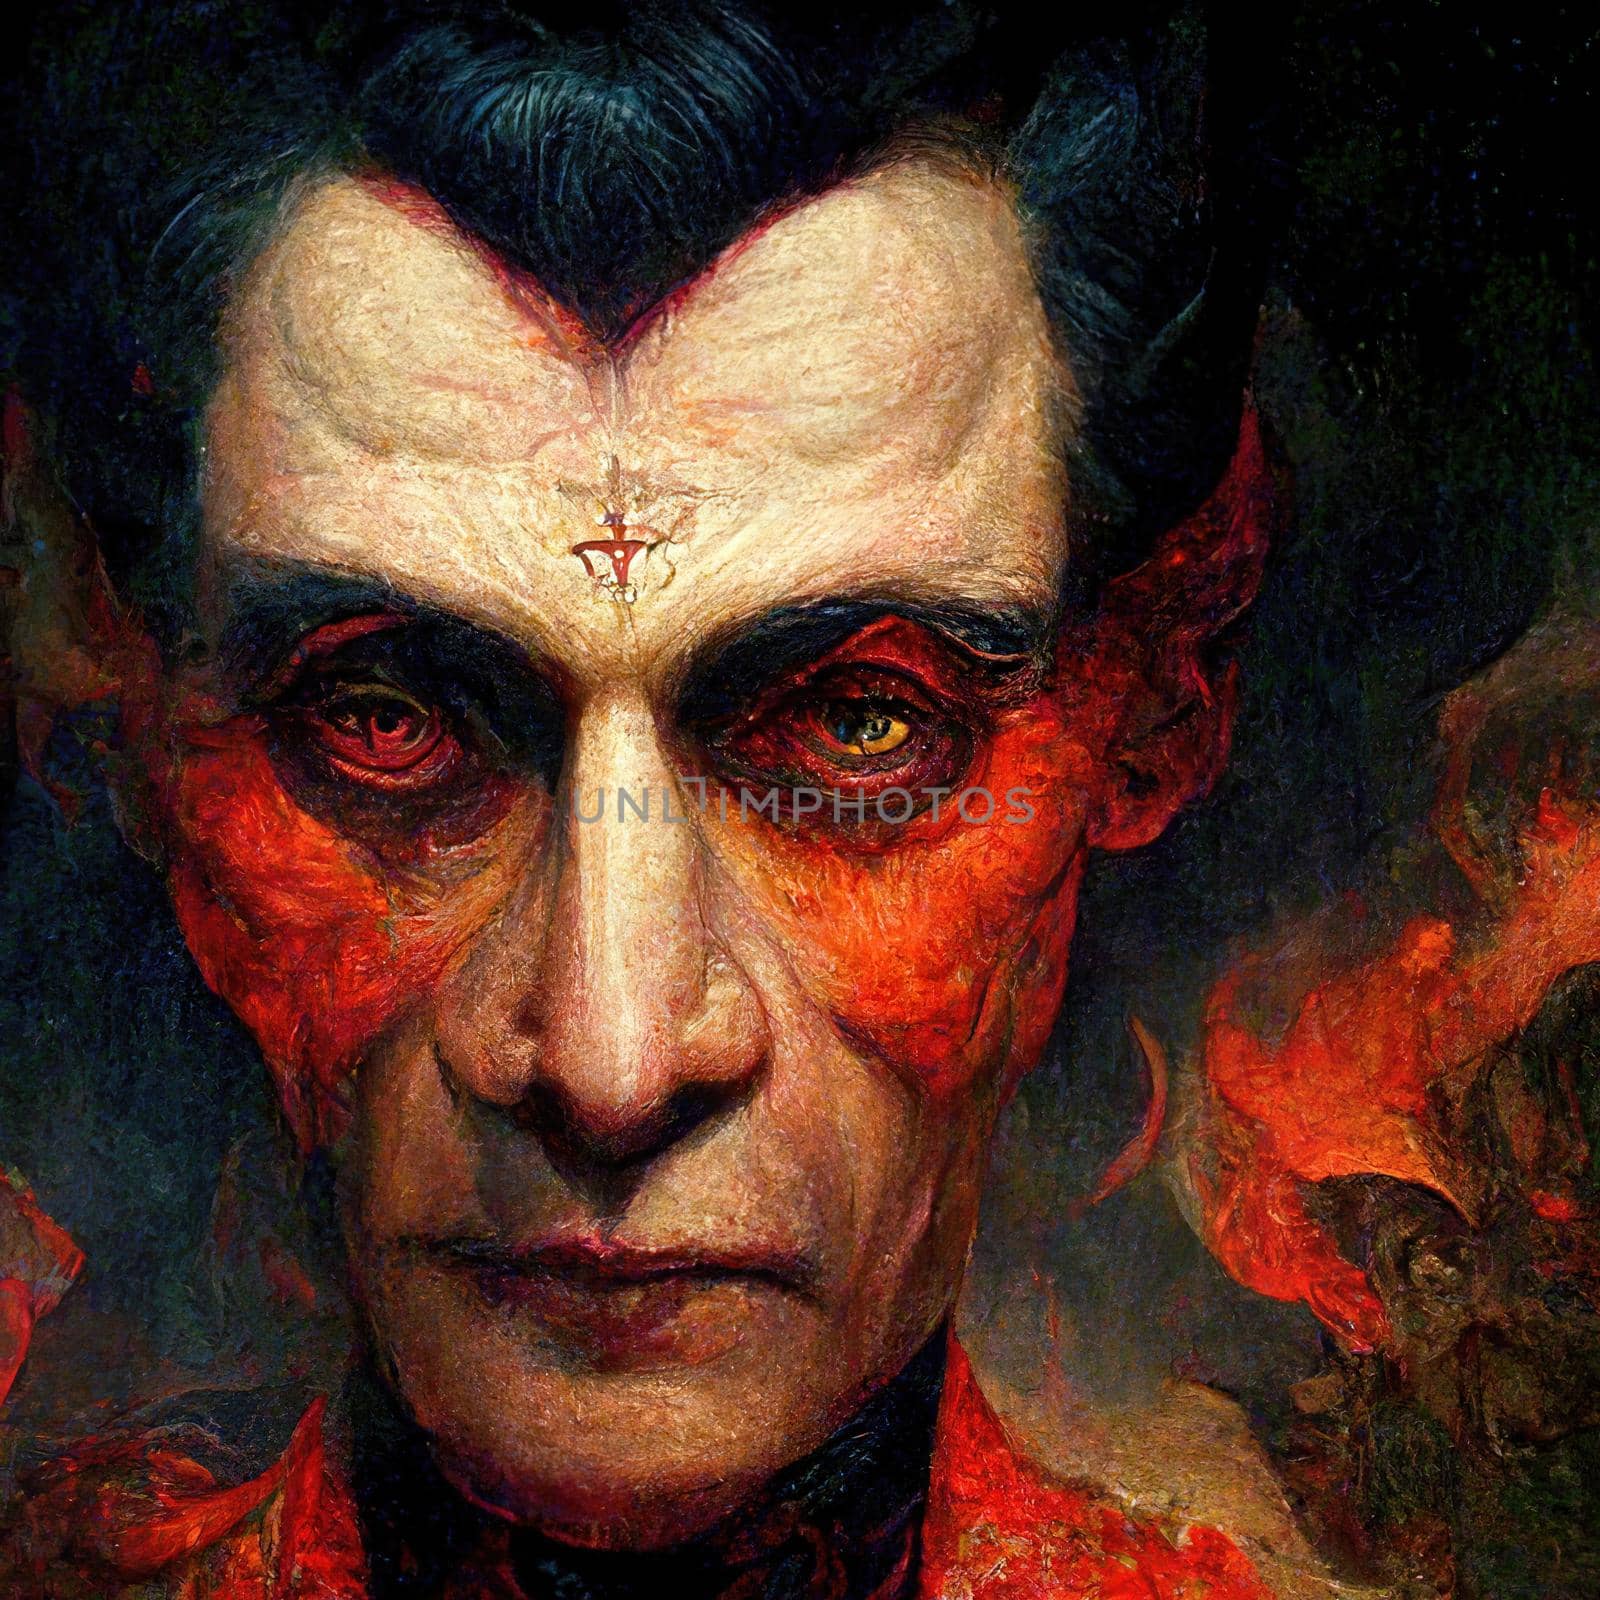 Portrait of devil, Illustration, drawing, digital art style, 3d Illustration